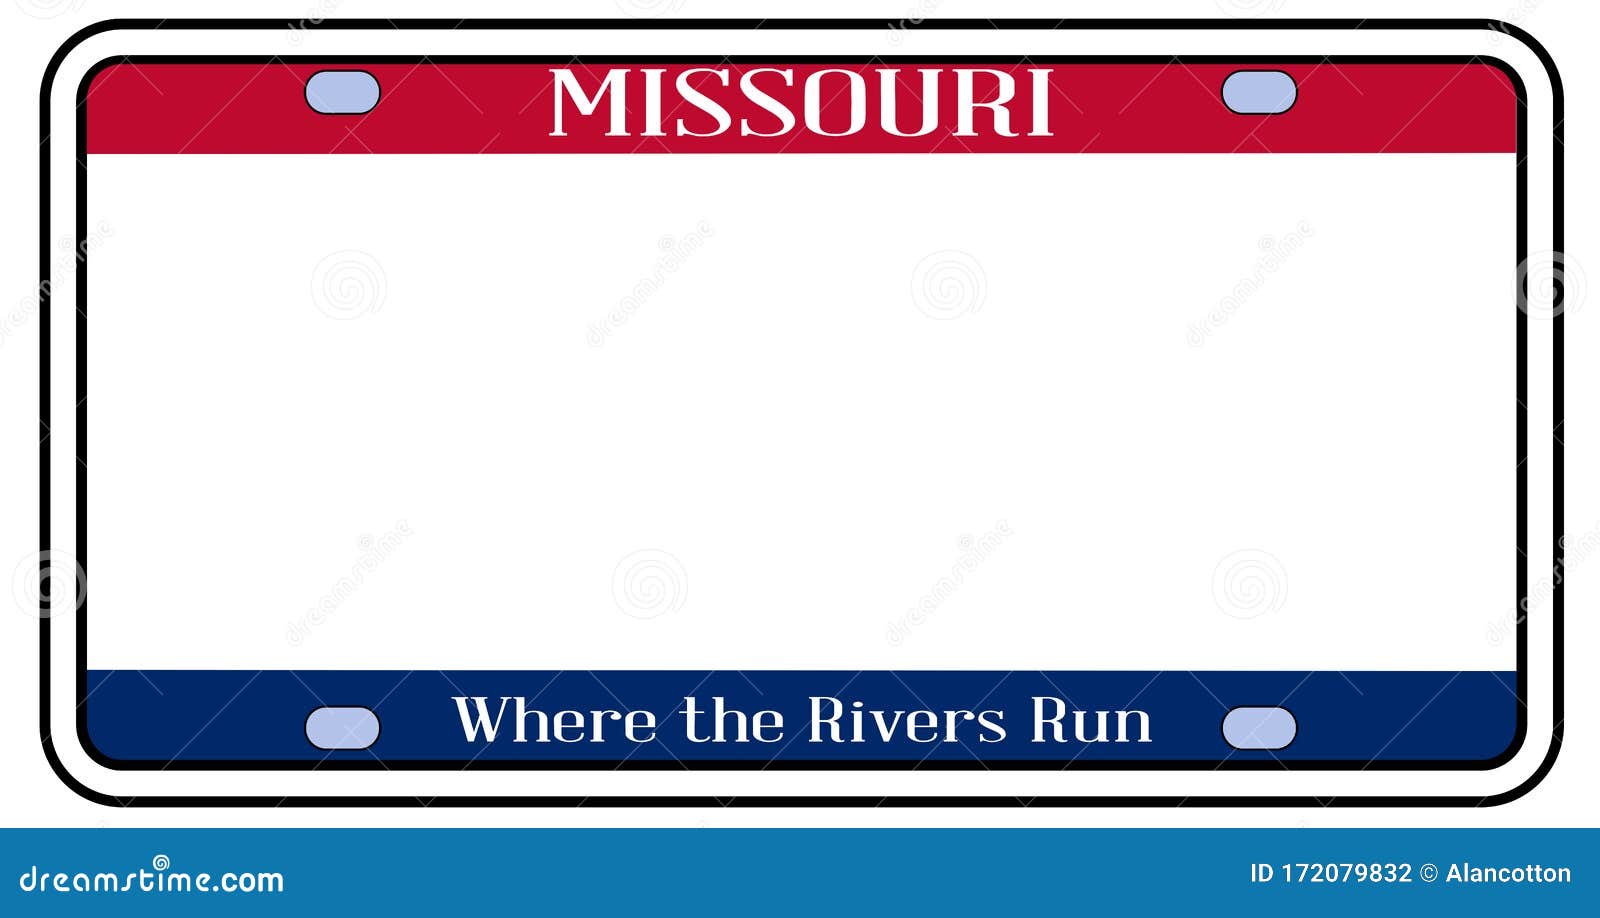 Blank Missouri License Plate Stock Vector Illustration of blank